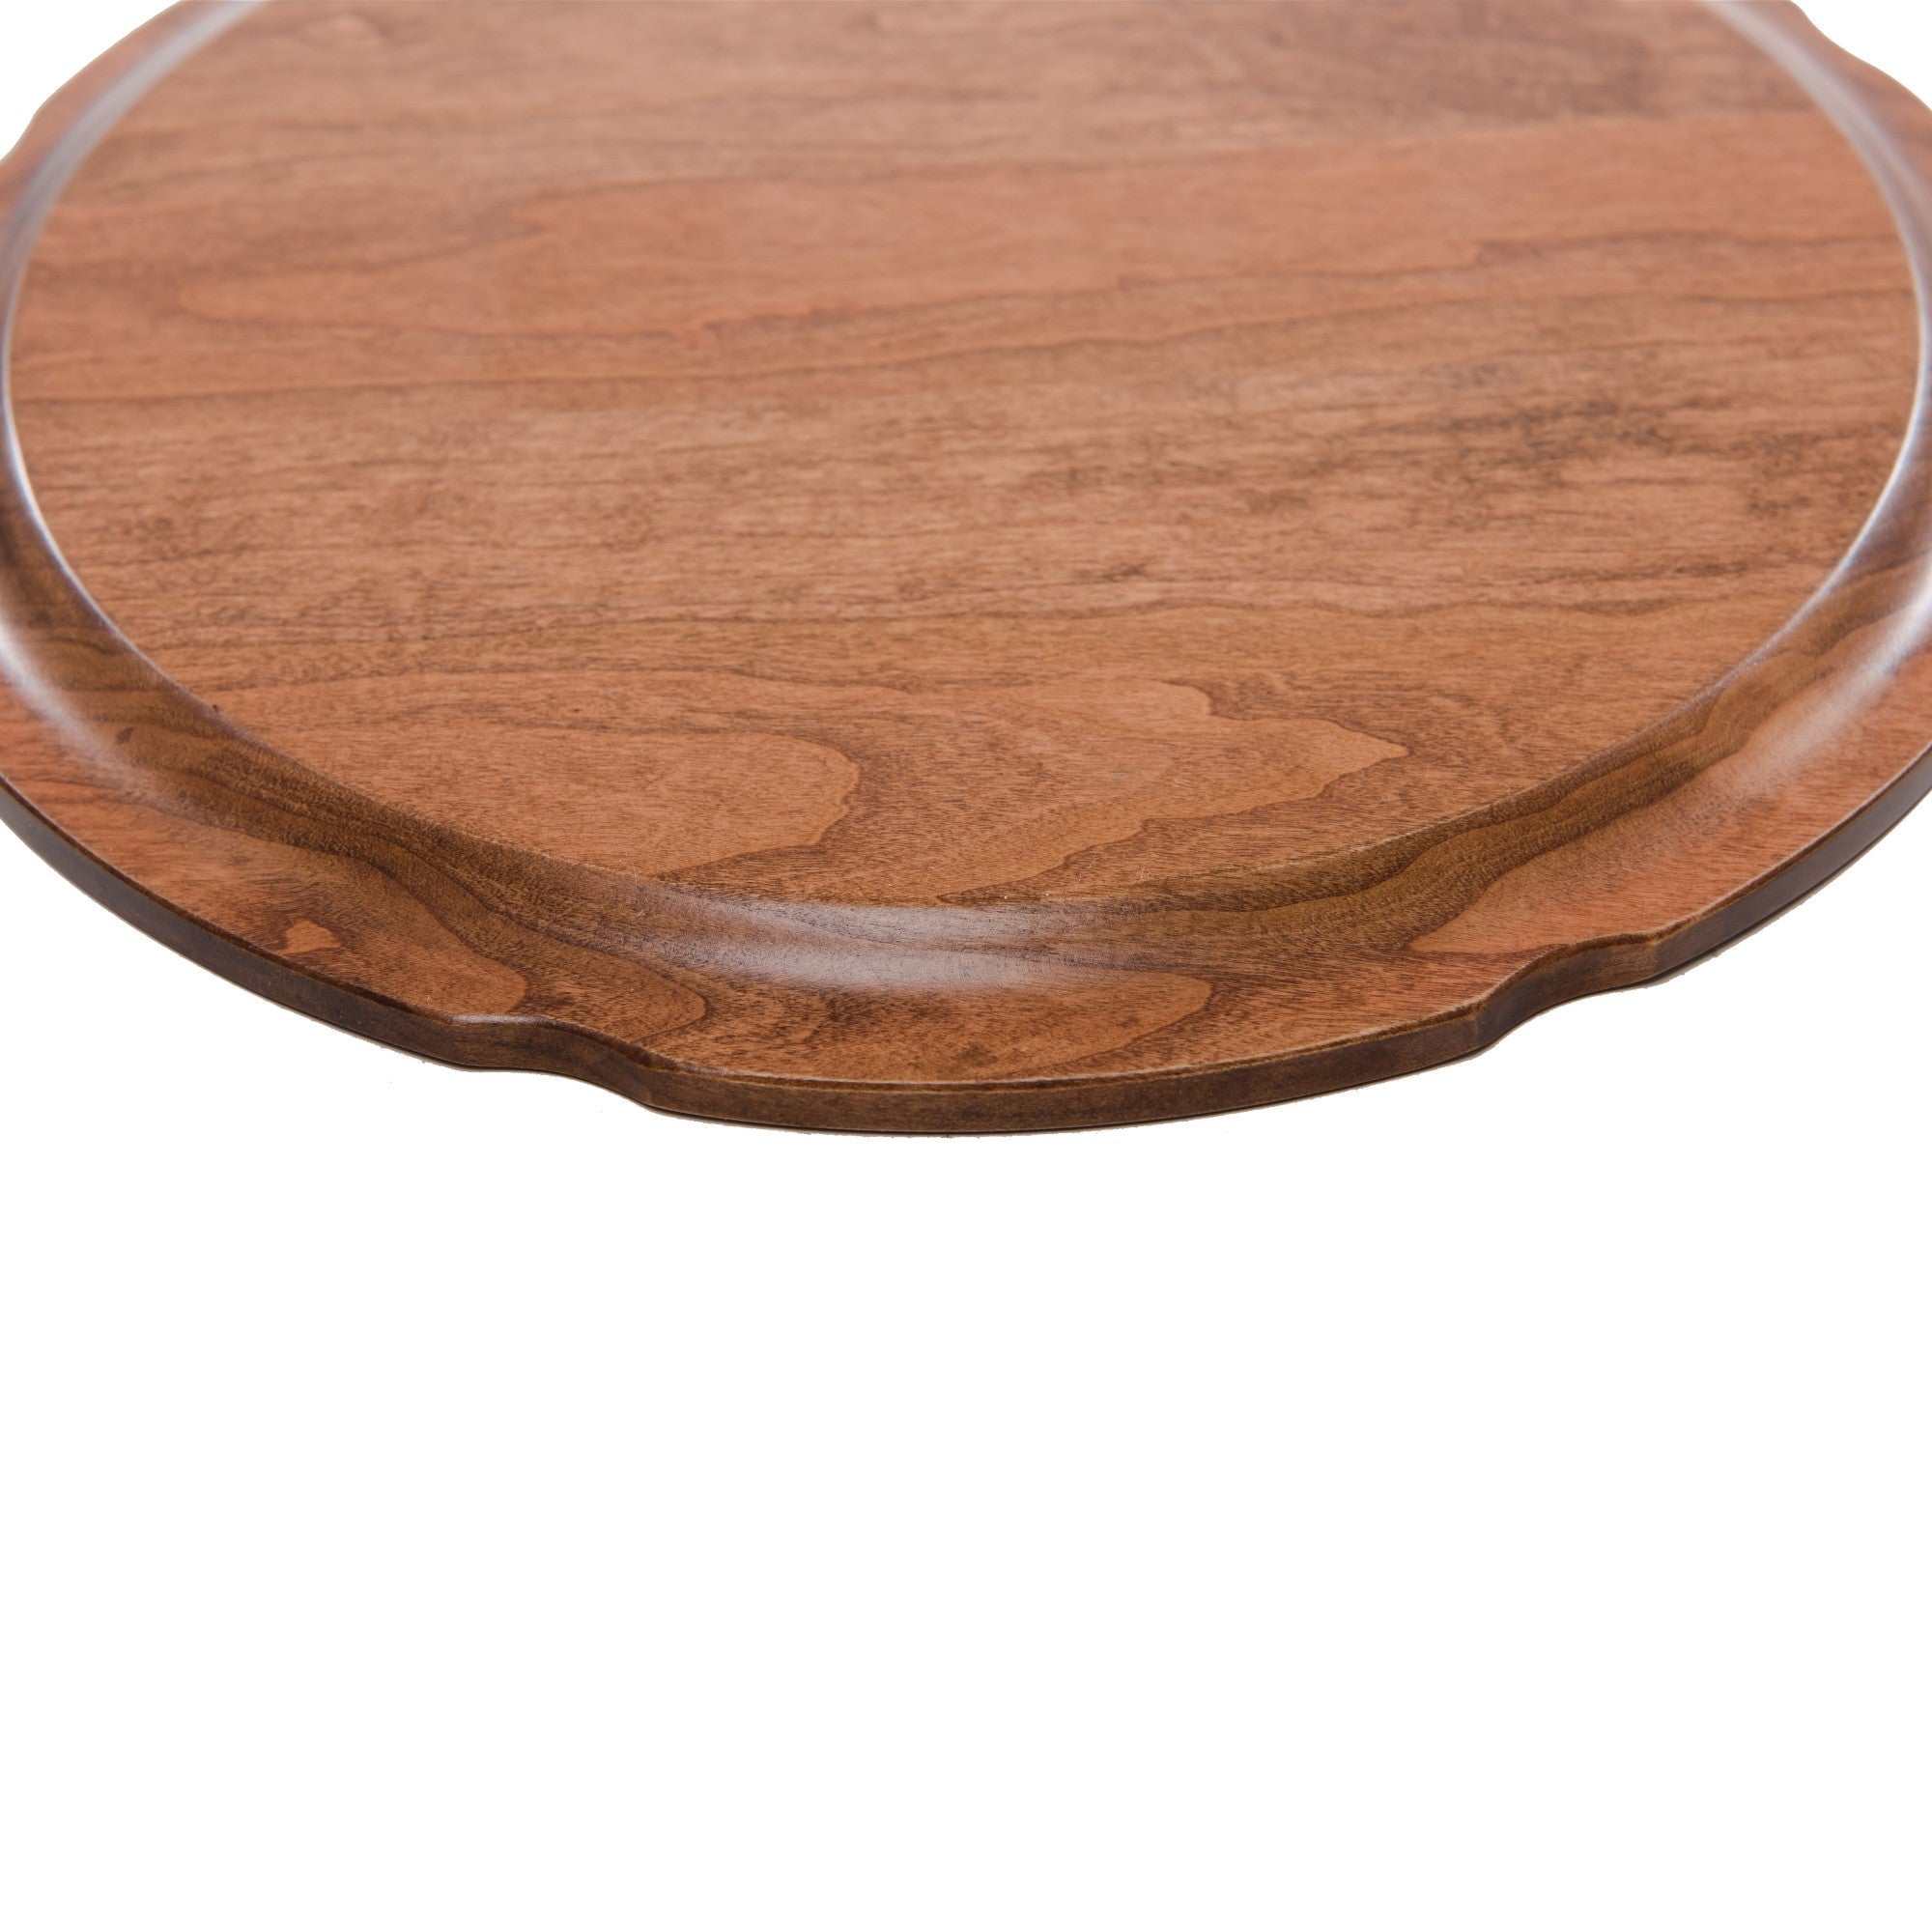 Pet Memorial Wooden Plate Décor - Gone But Not Forgotten - LifeSong Milestones